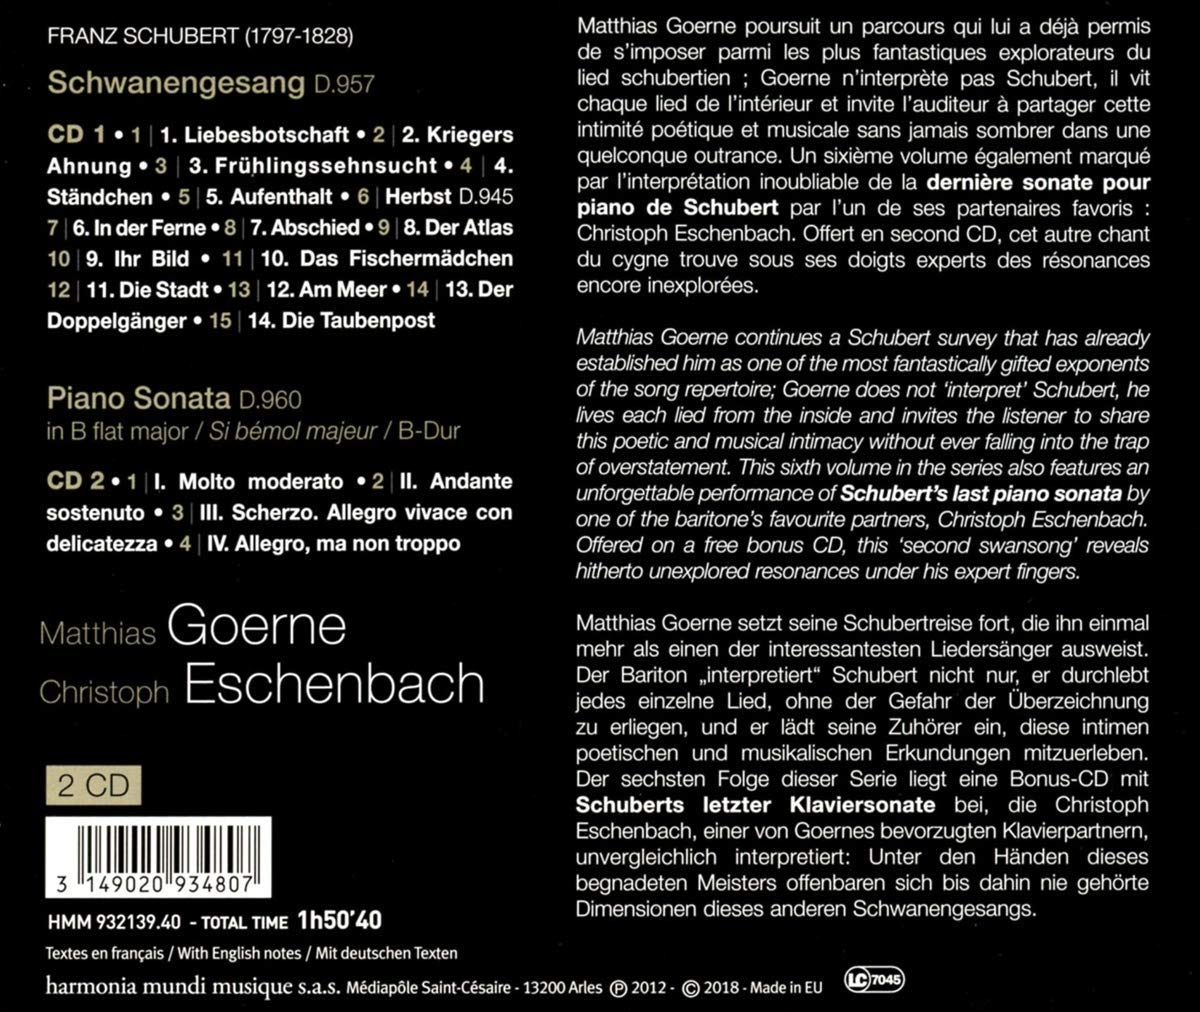 Matthias Goerne 슈베르트: 가곡 6집 - 백조의 노래, 가을, 피아노 소나타 (Schubert: Lieder Vol.6 - Schwanengesang, Piano Sonata, D.960) 마티아스 괴르네